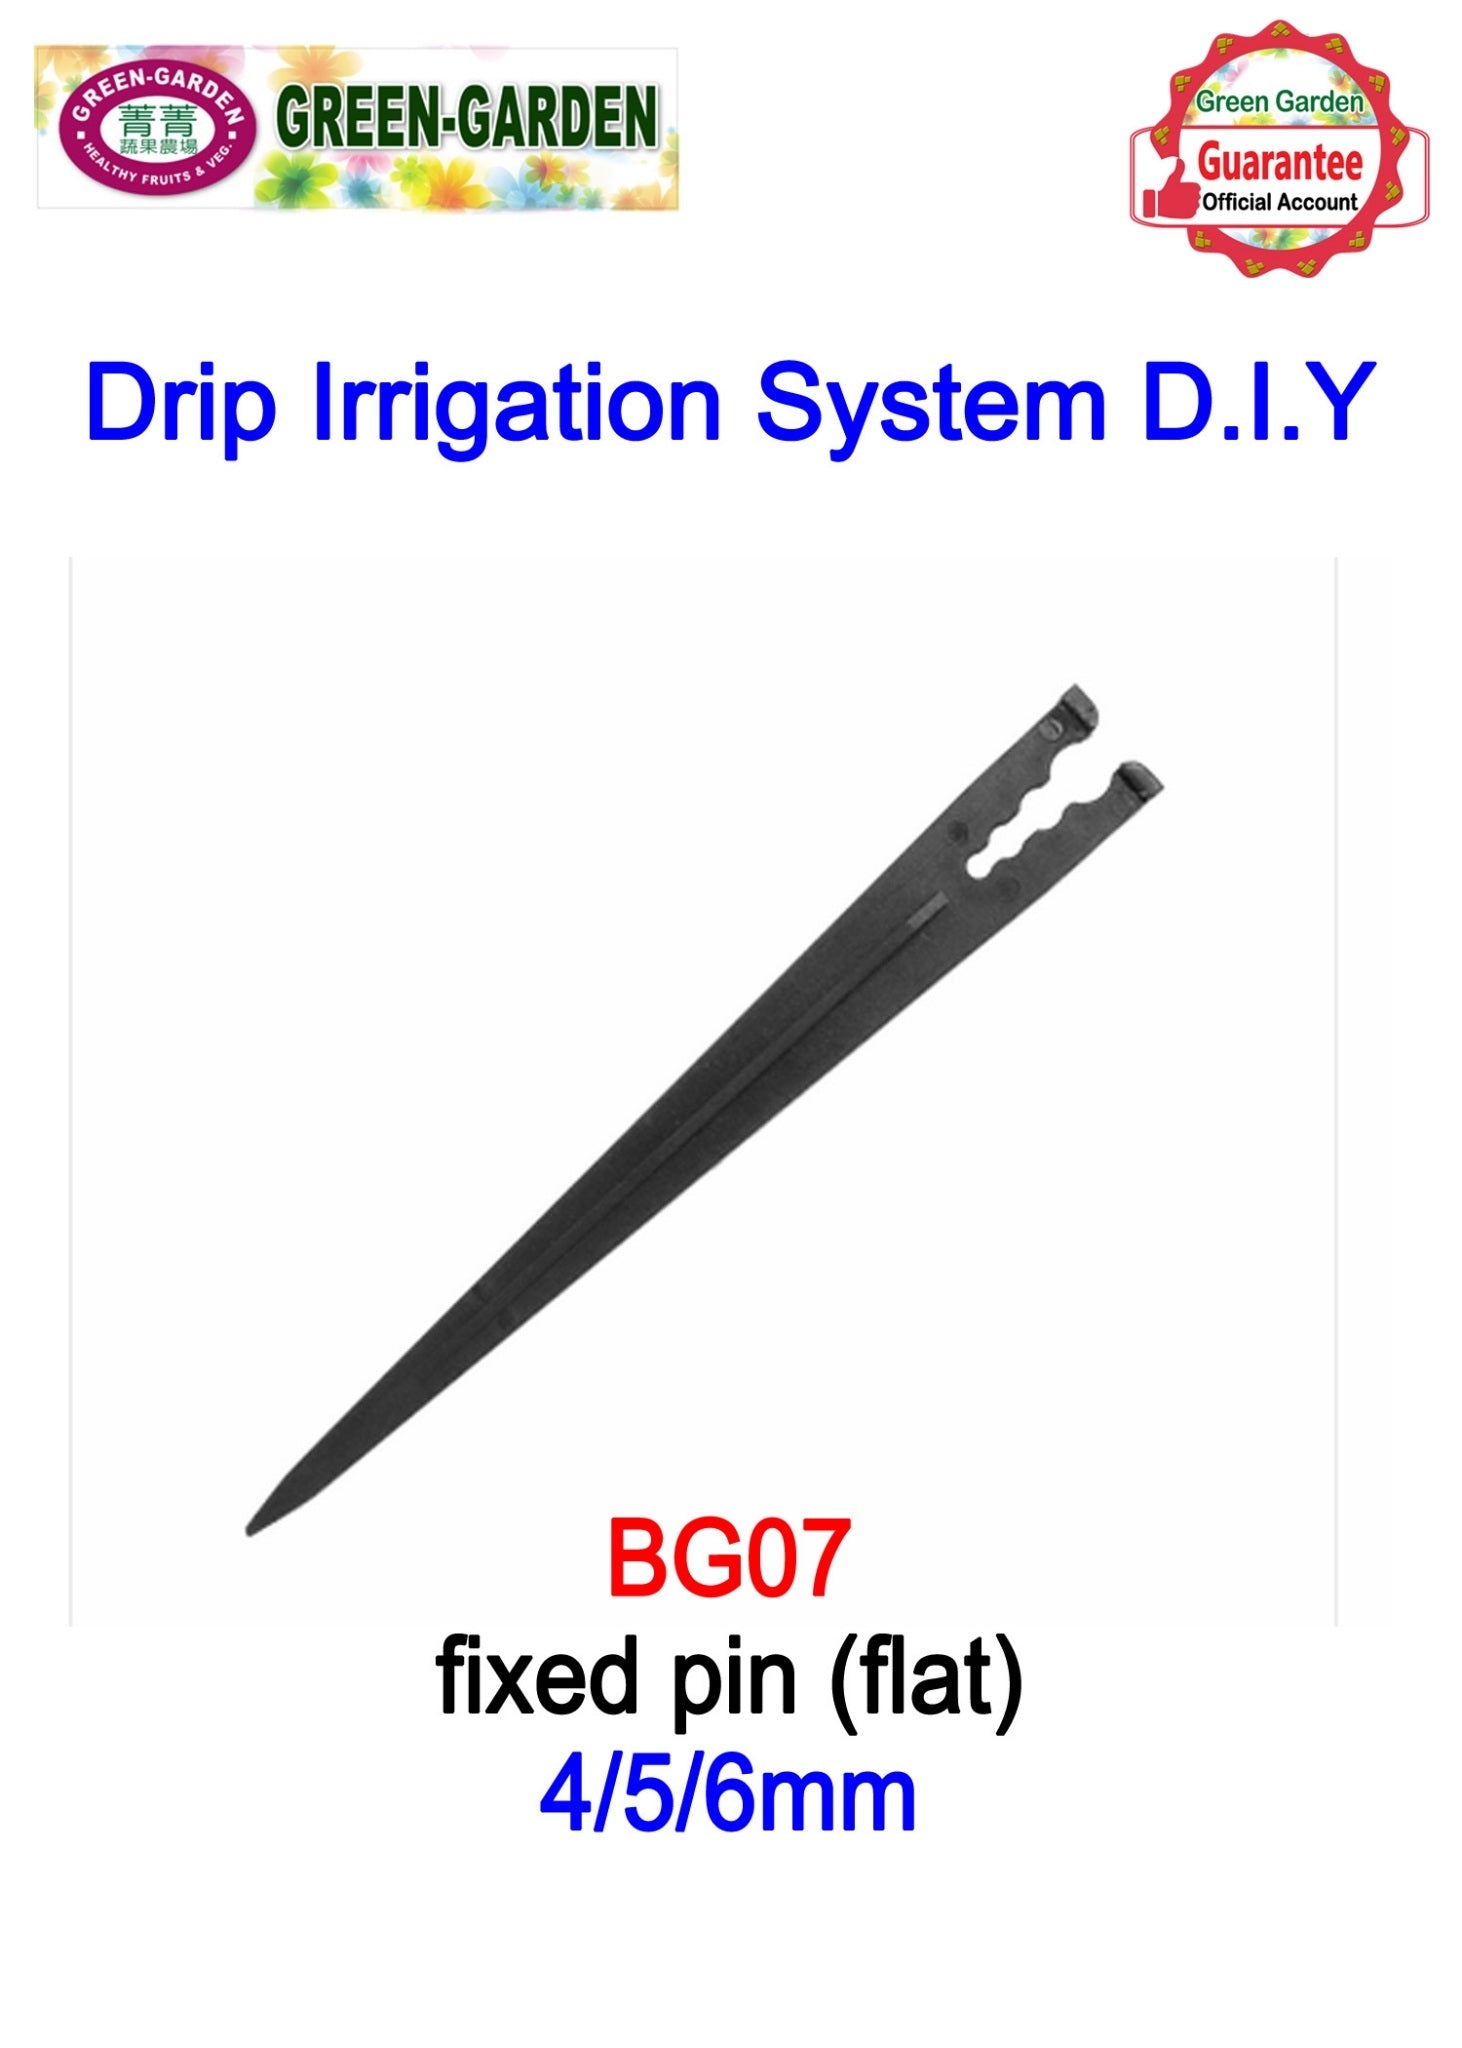 Drip Irrigation System - 4/5/6mm fixed pin (flat type) (20pcs) BG07